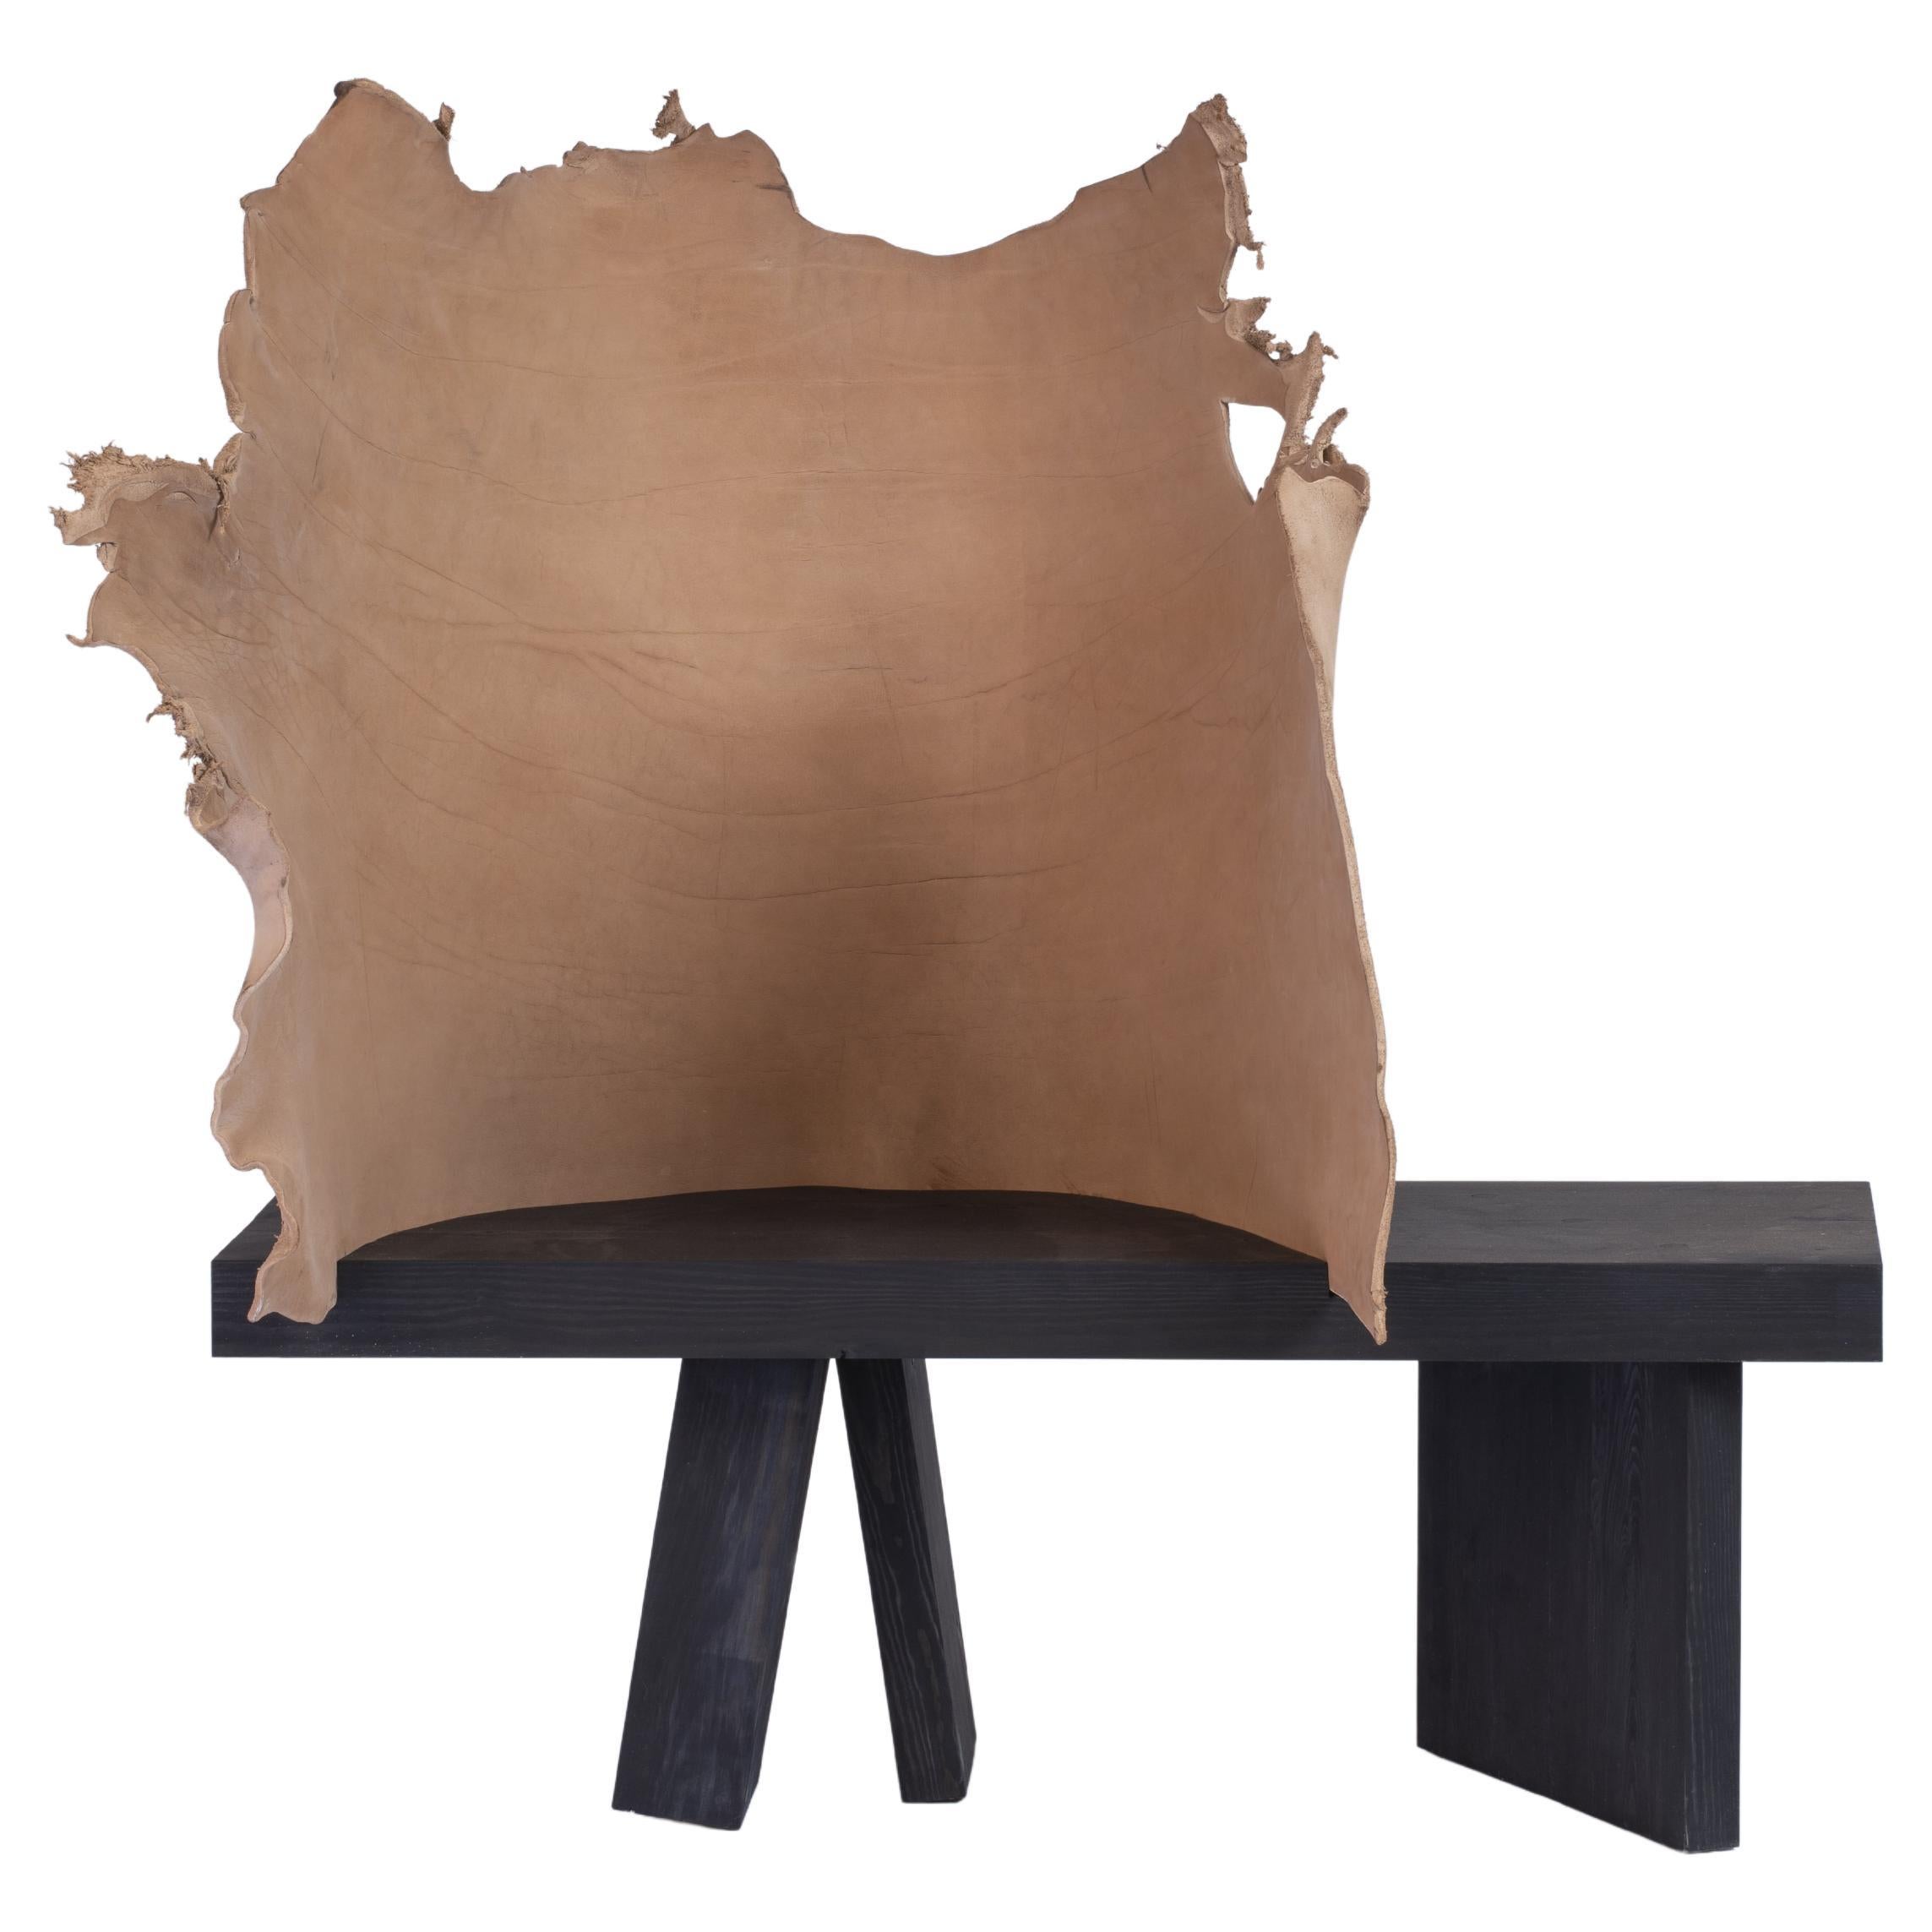 Mímesis #3 by Jordi Ribaudí, Buffalo Leather Sculptural Furniture